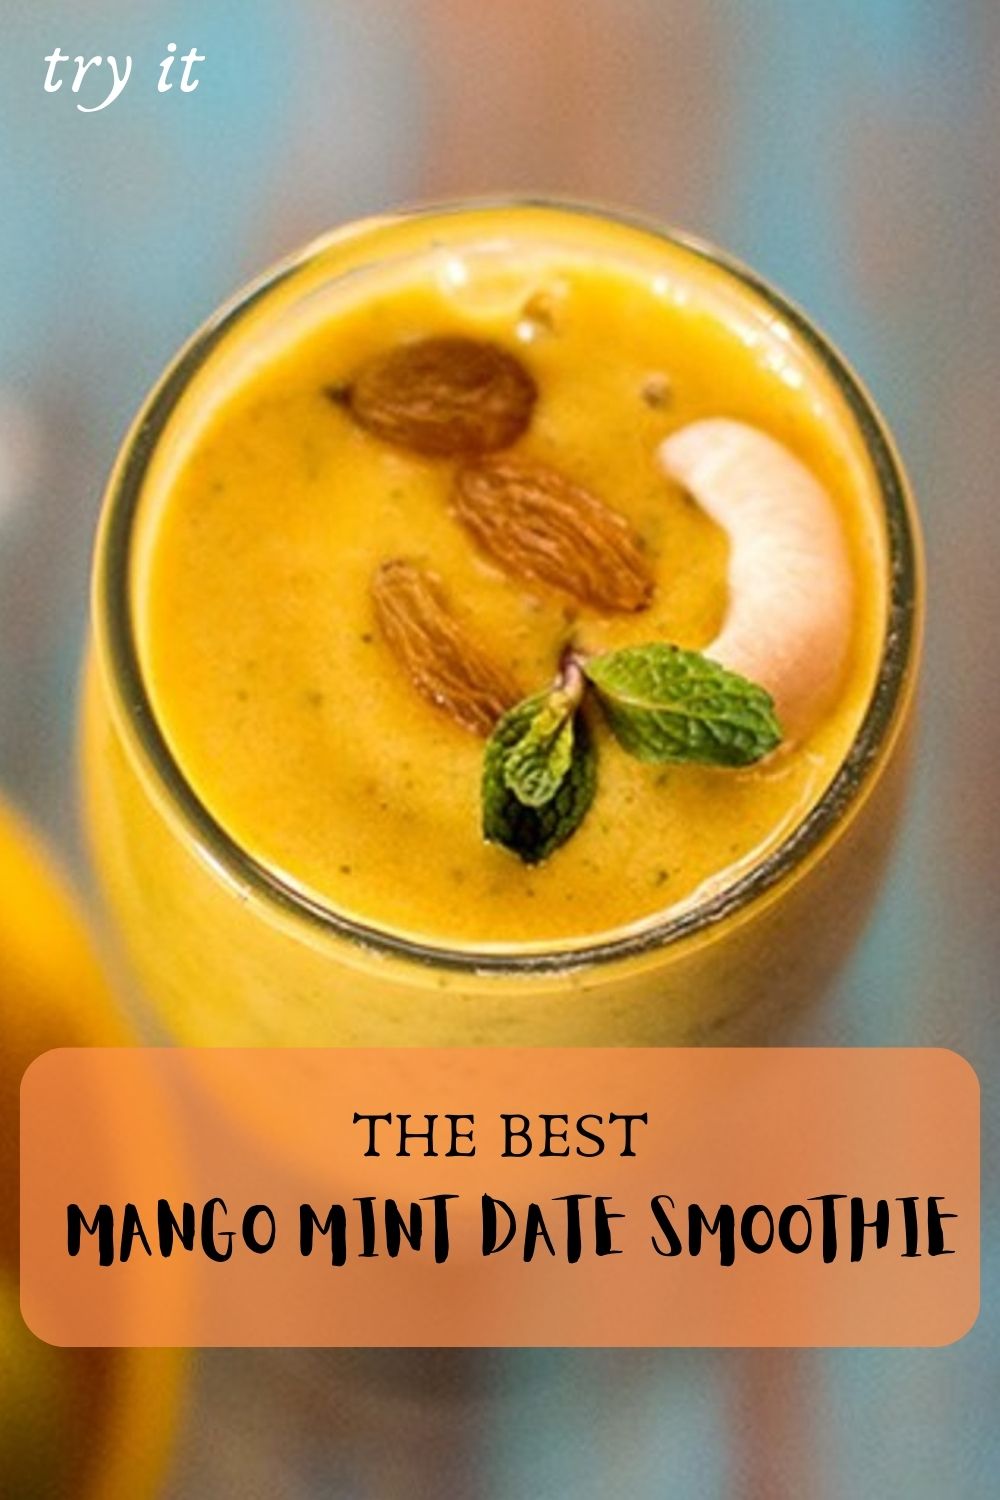 %Mango Mint Date Smoothie pinterest pin